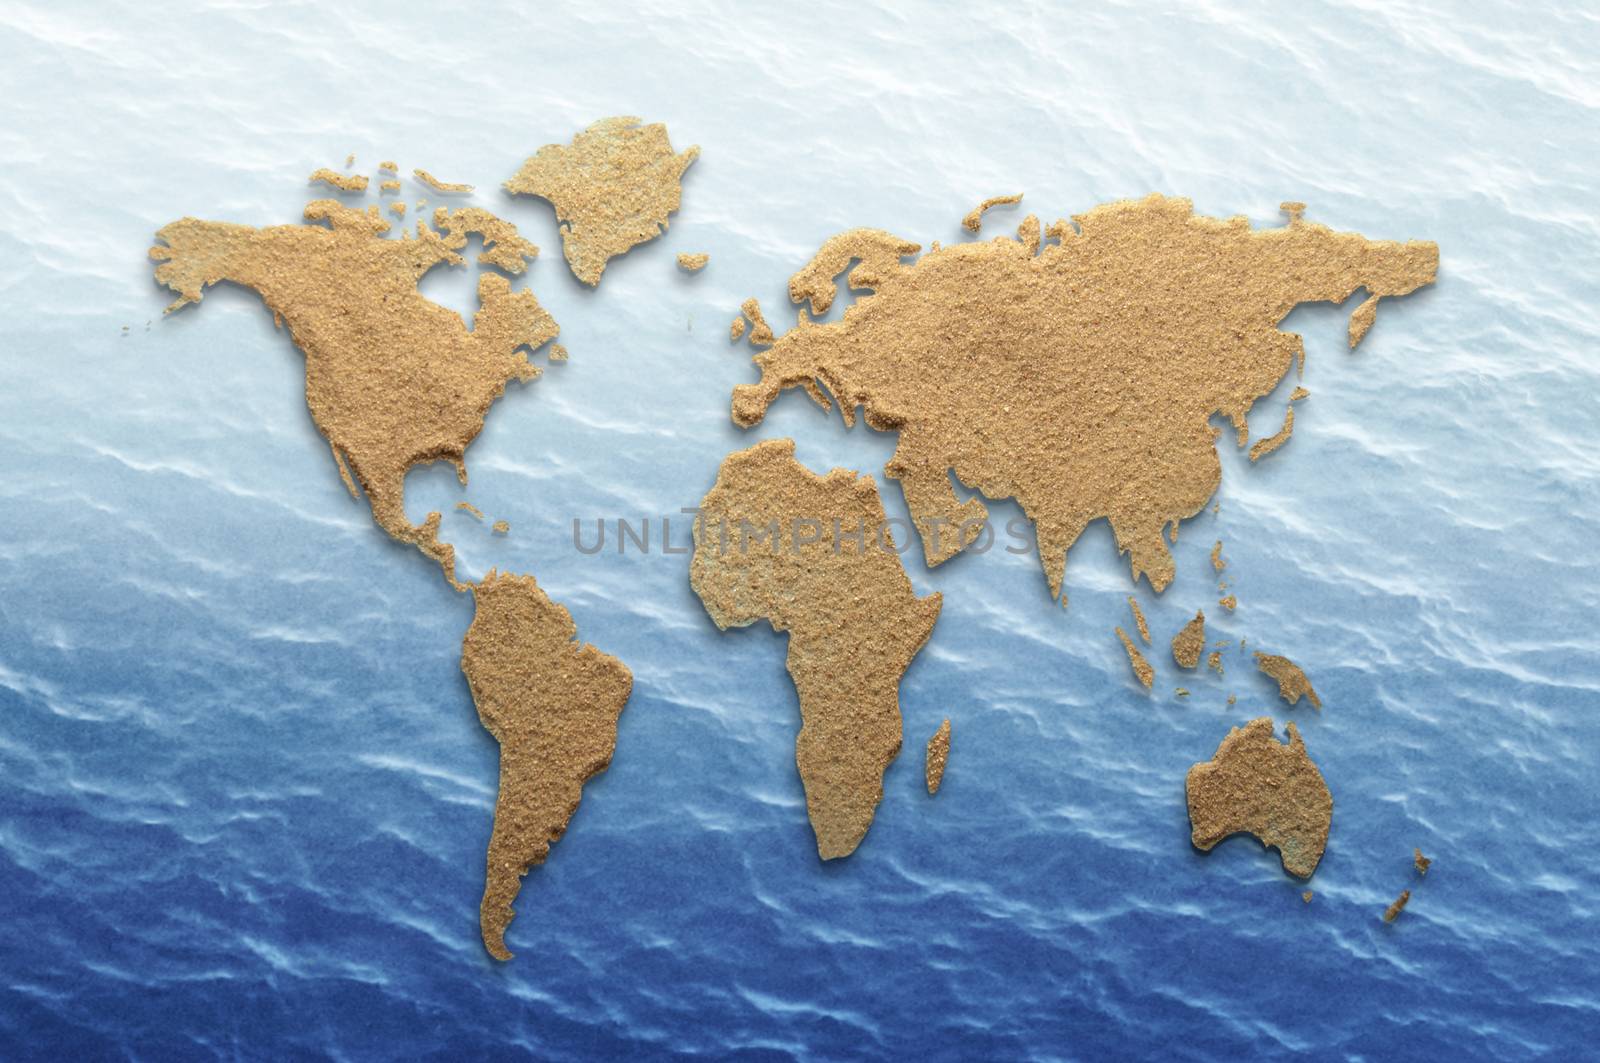 World map made of sand by unikpix